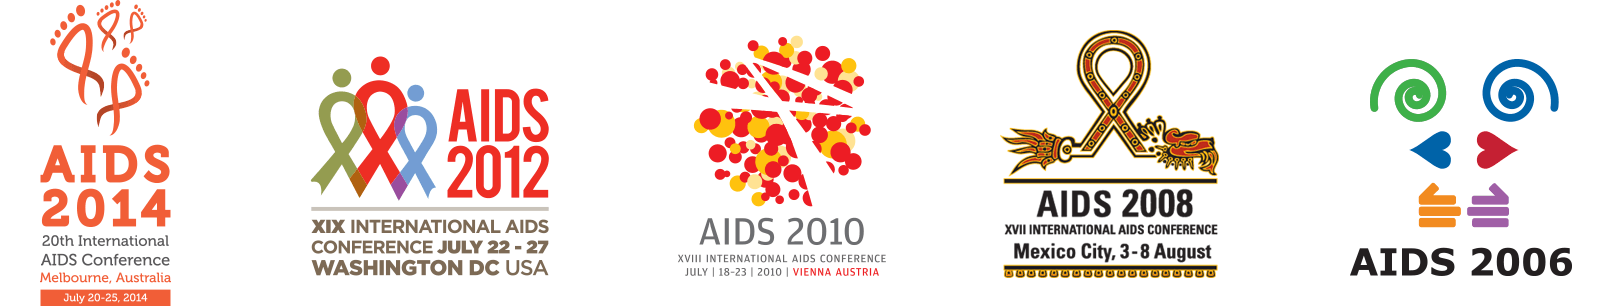 Conference Logo - AIDS 2016 Logo Contest